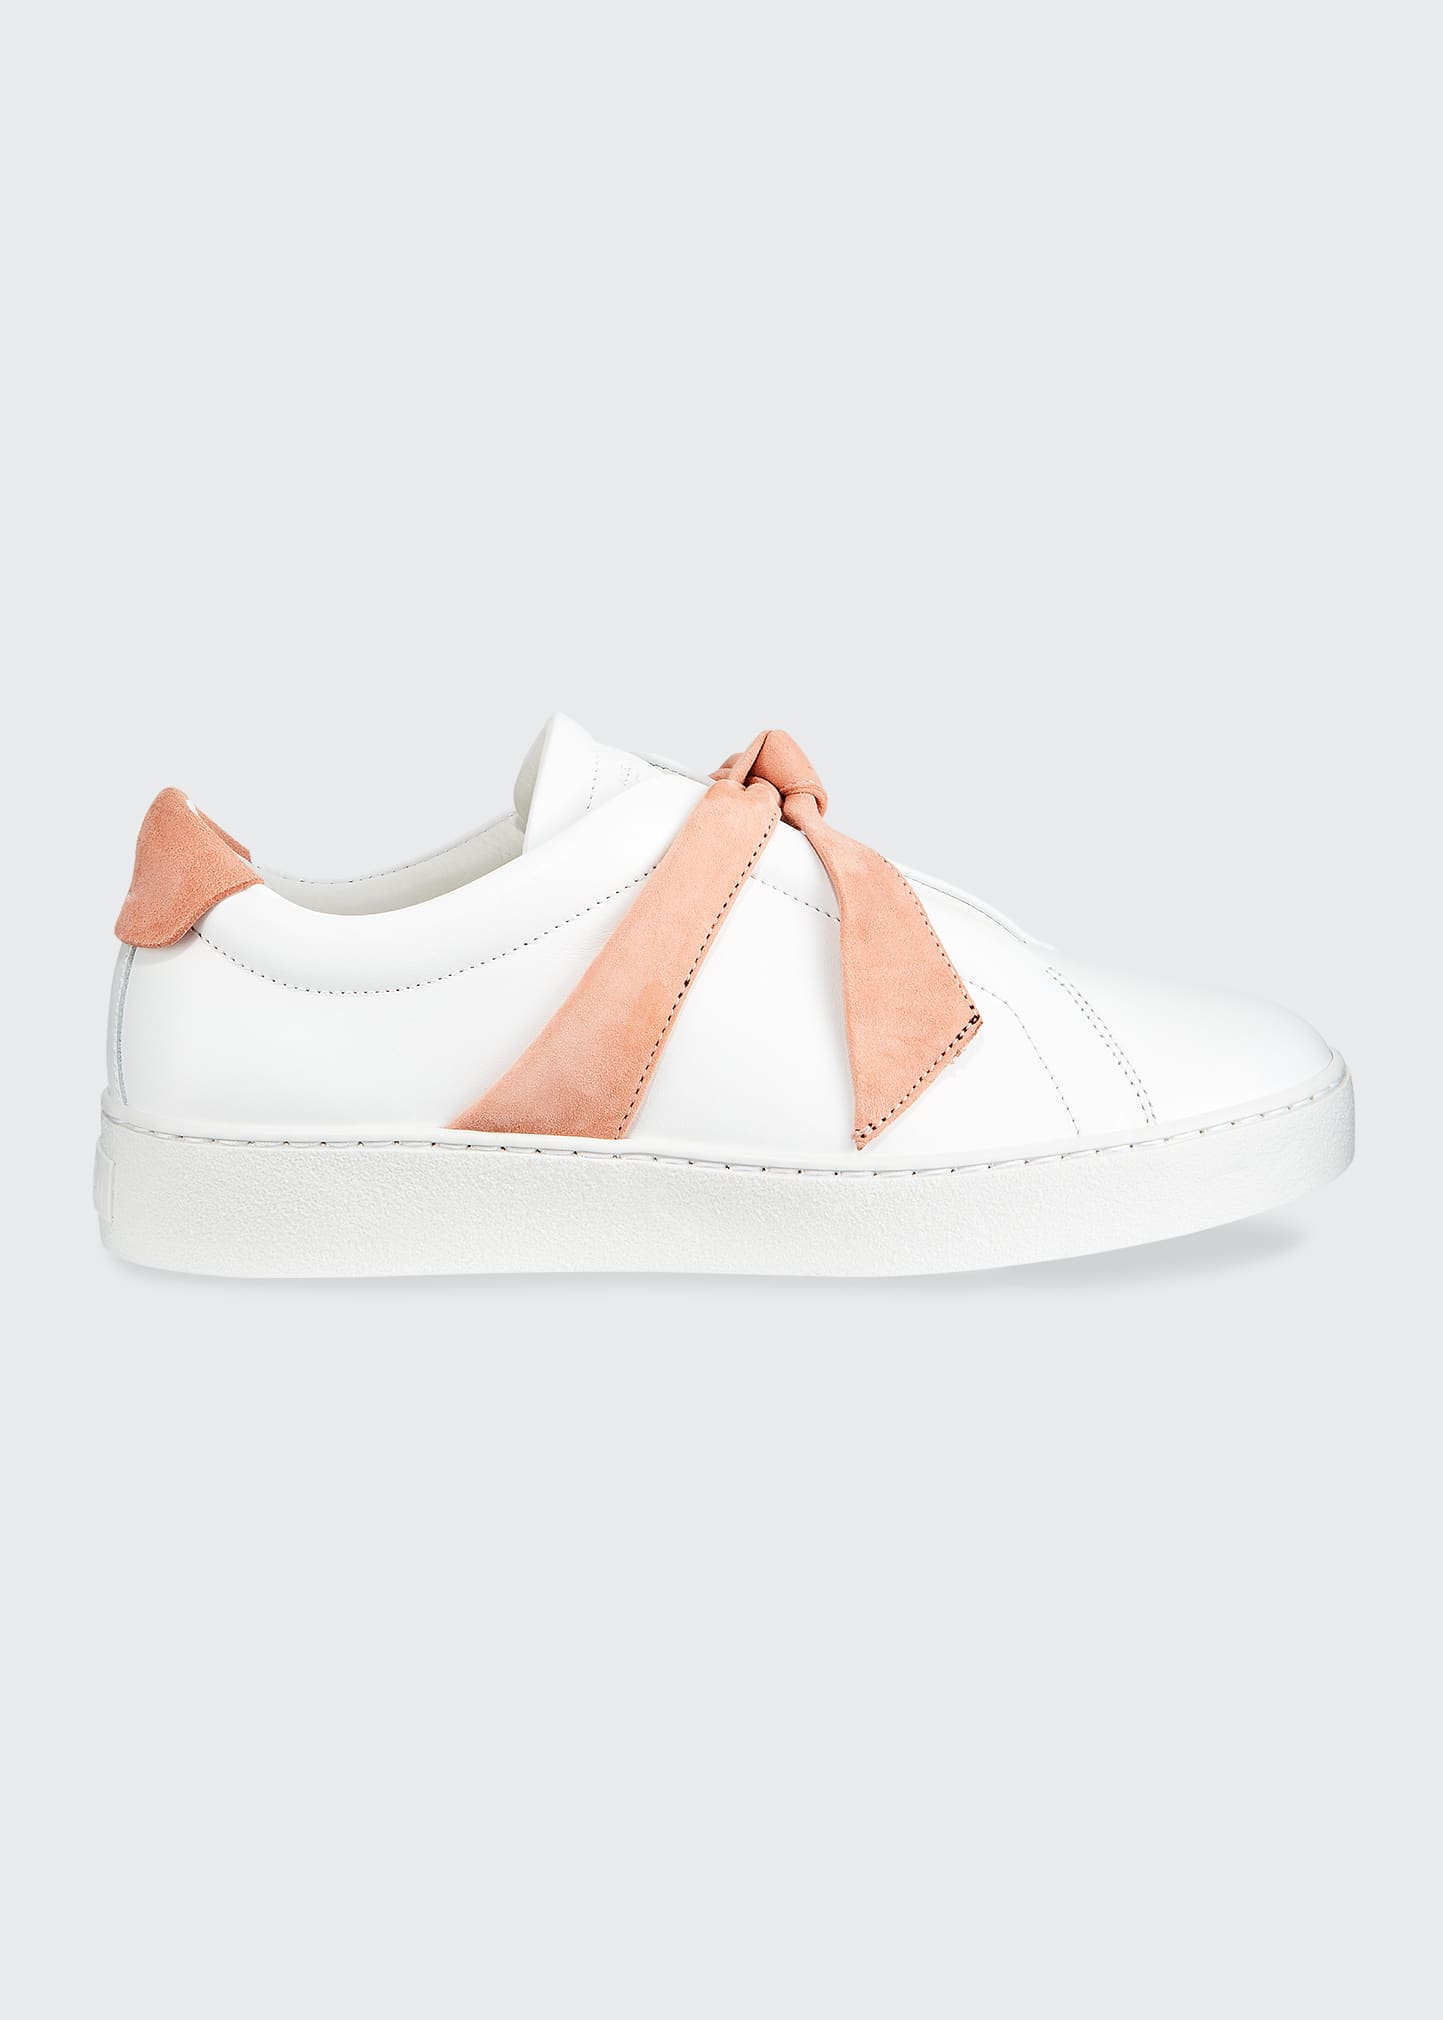 Clarita Two-Tone Sneakers, White/Pink | Bergdorf Goodman